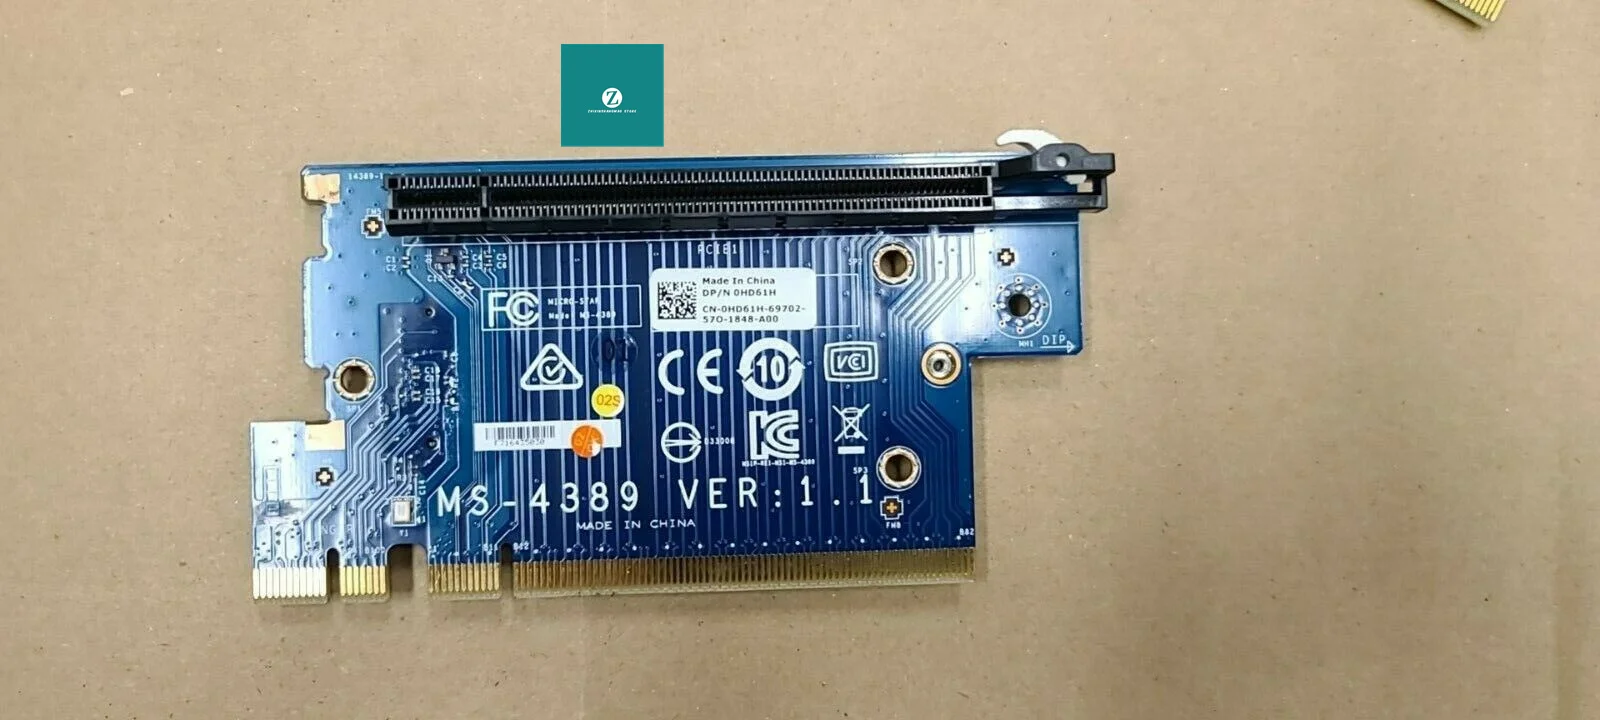 

FOR DELL X51 R3 PCIE SSD board HD61H MS-4389 0HD61H